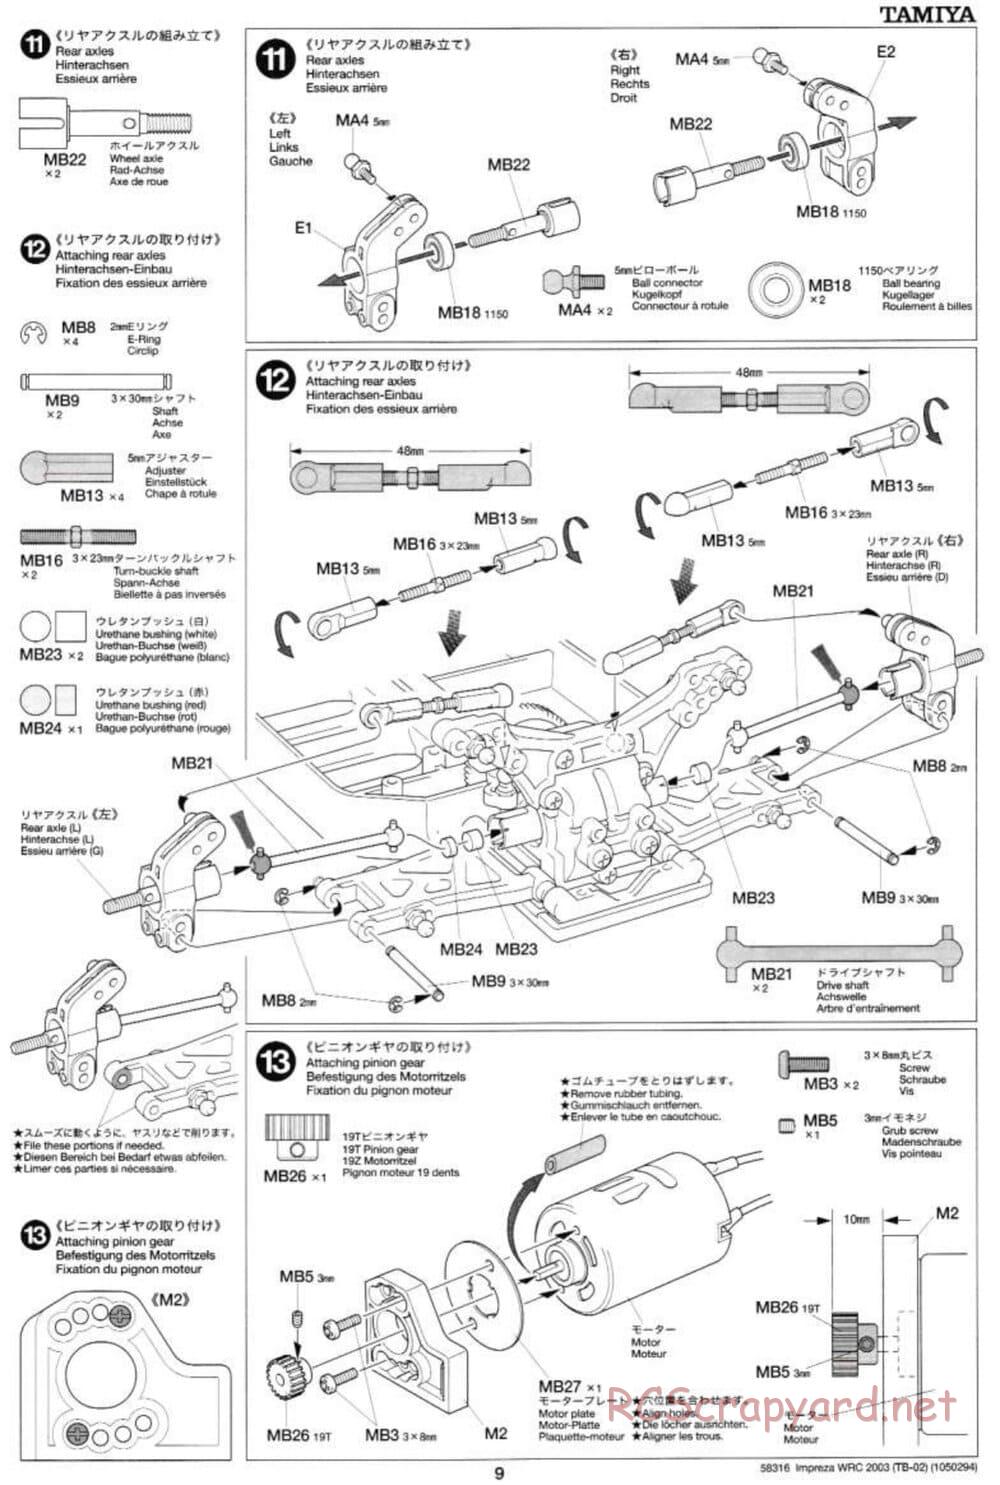 Tamiya - Subaru Impreza WRC 2003 - TB-02 Chassis - Manual - Page 9